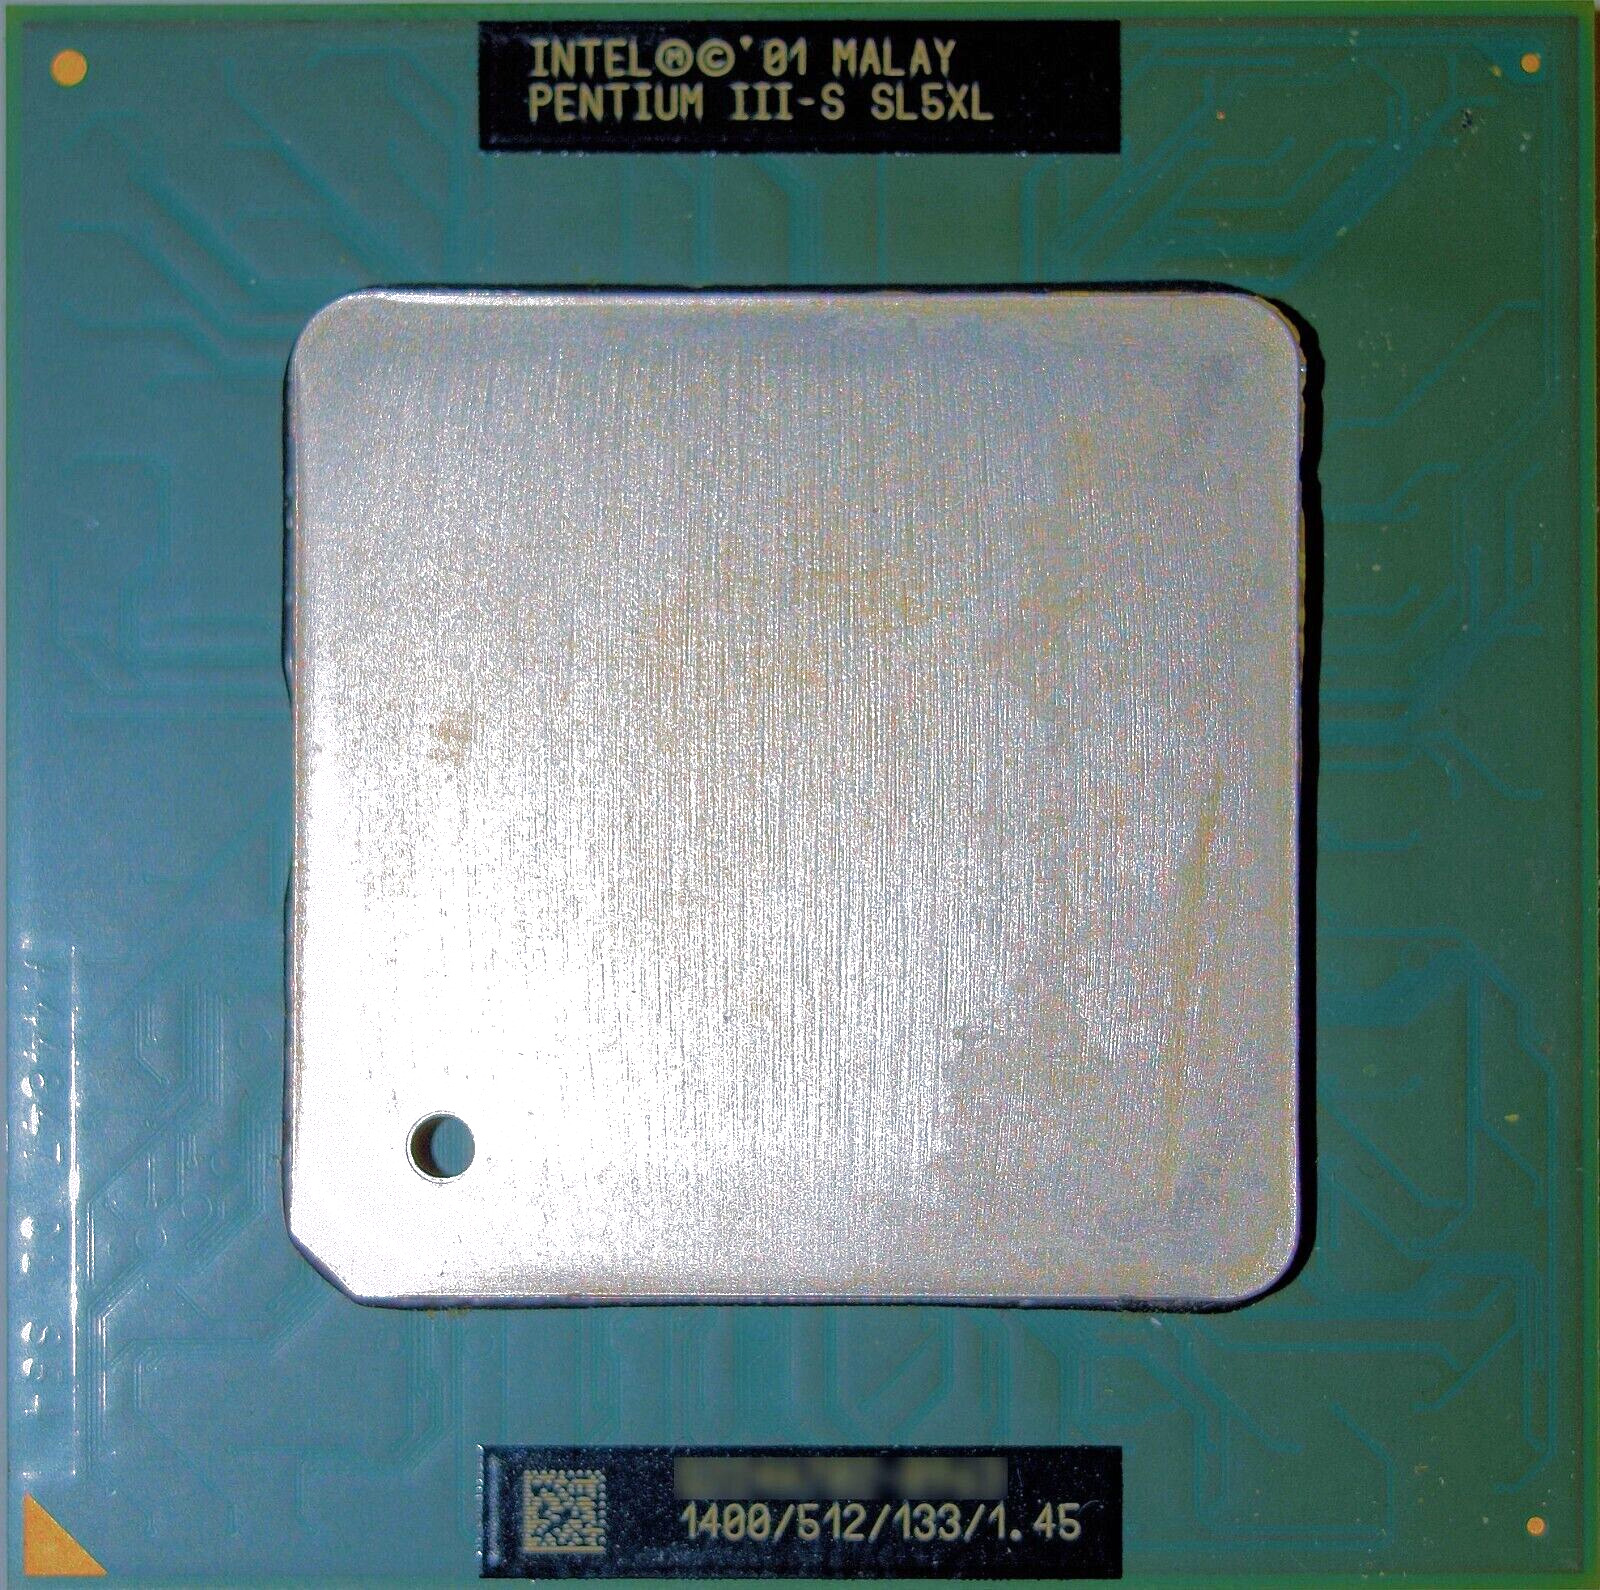 Intel Pentium III-S 1400/512/133/1.45V 1400MHz Server Processor, SL5XL, Tualatin